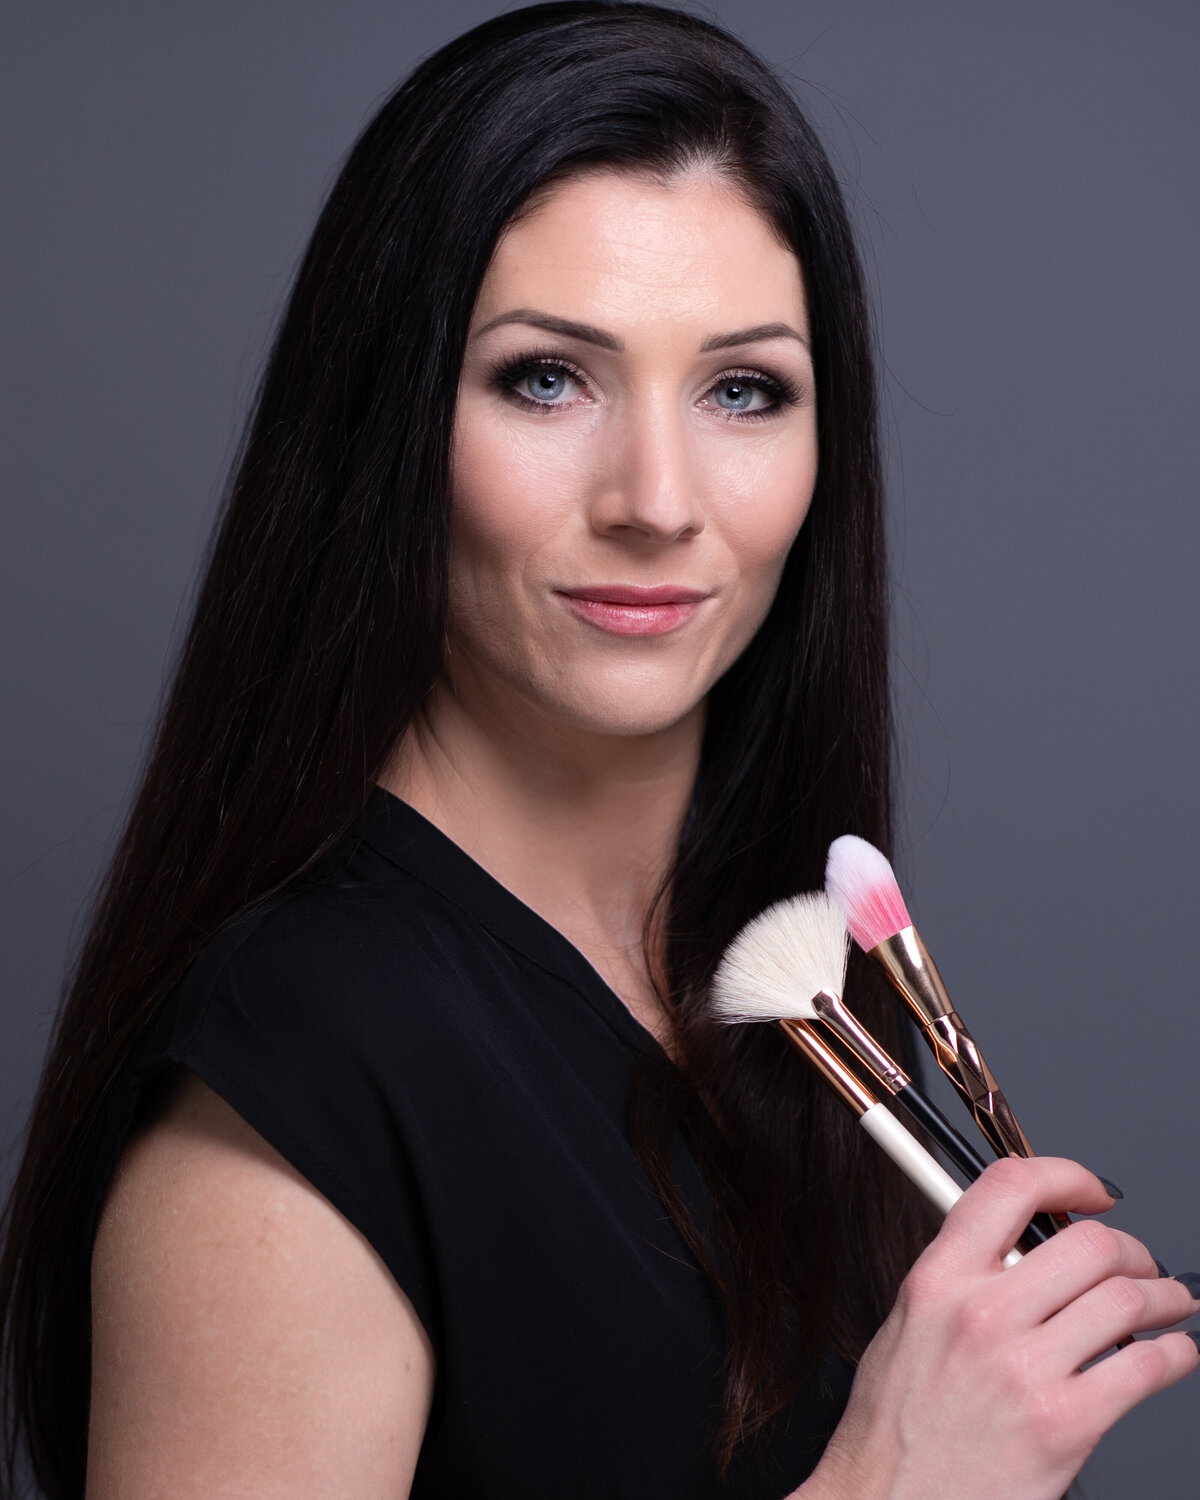 closeup branding image of makeup artist holding her brushes